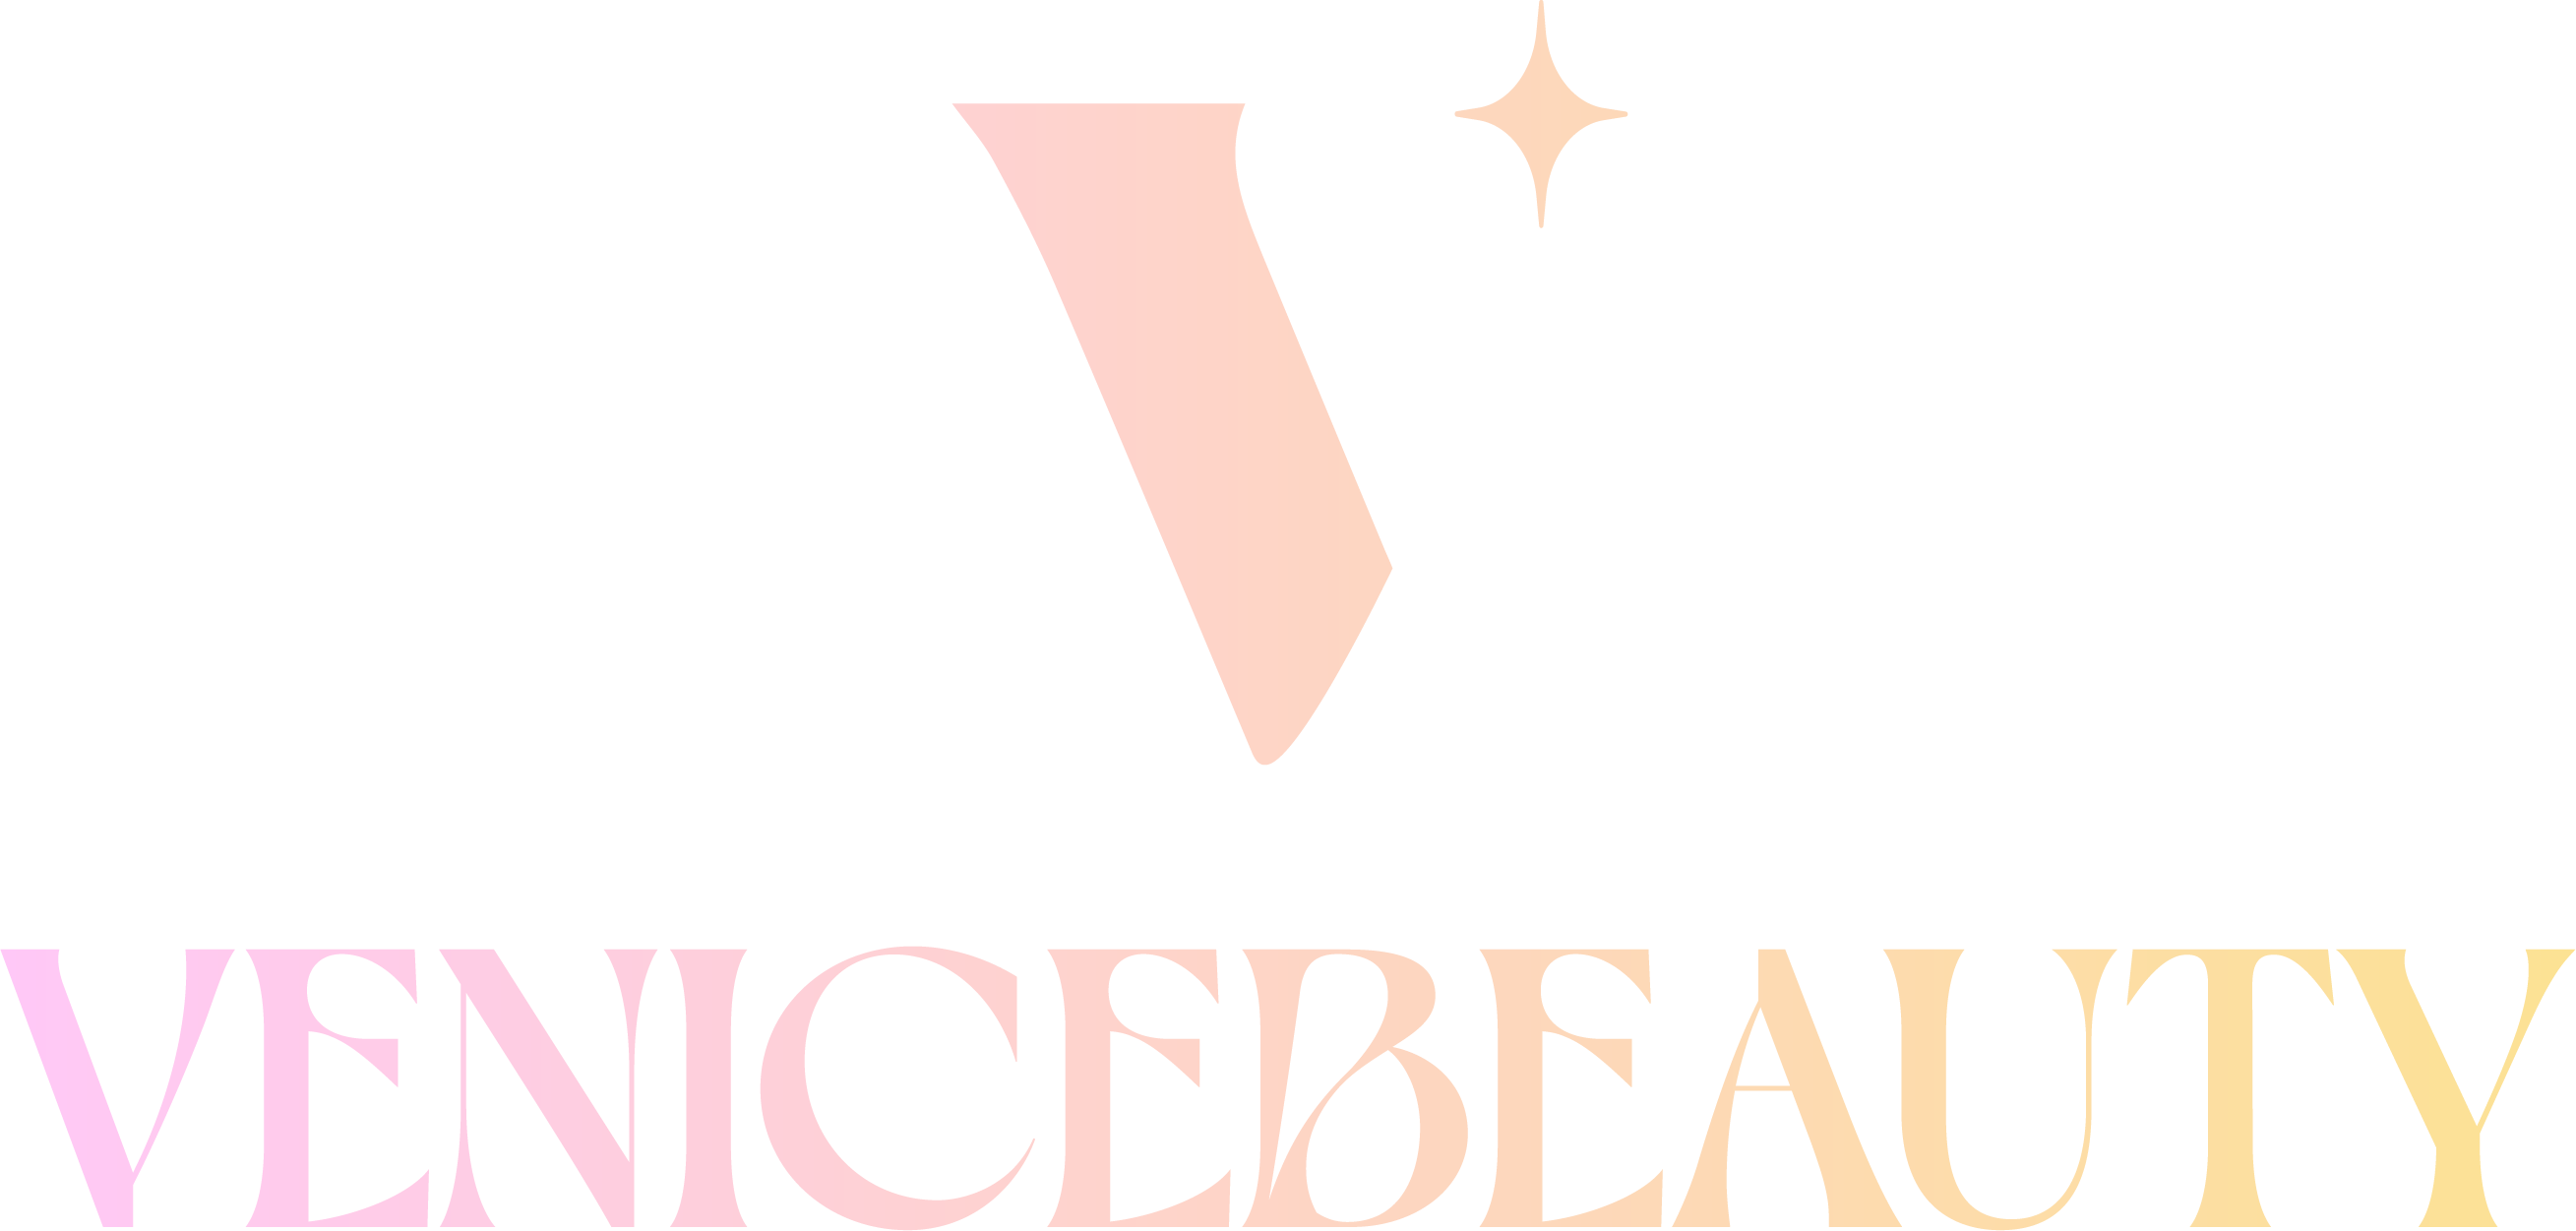 VENICEBEAUTY Support logo